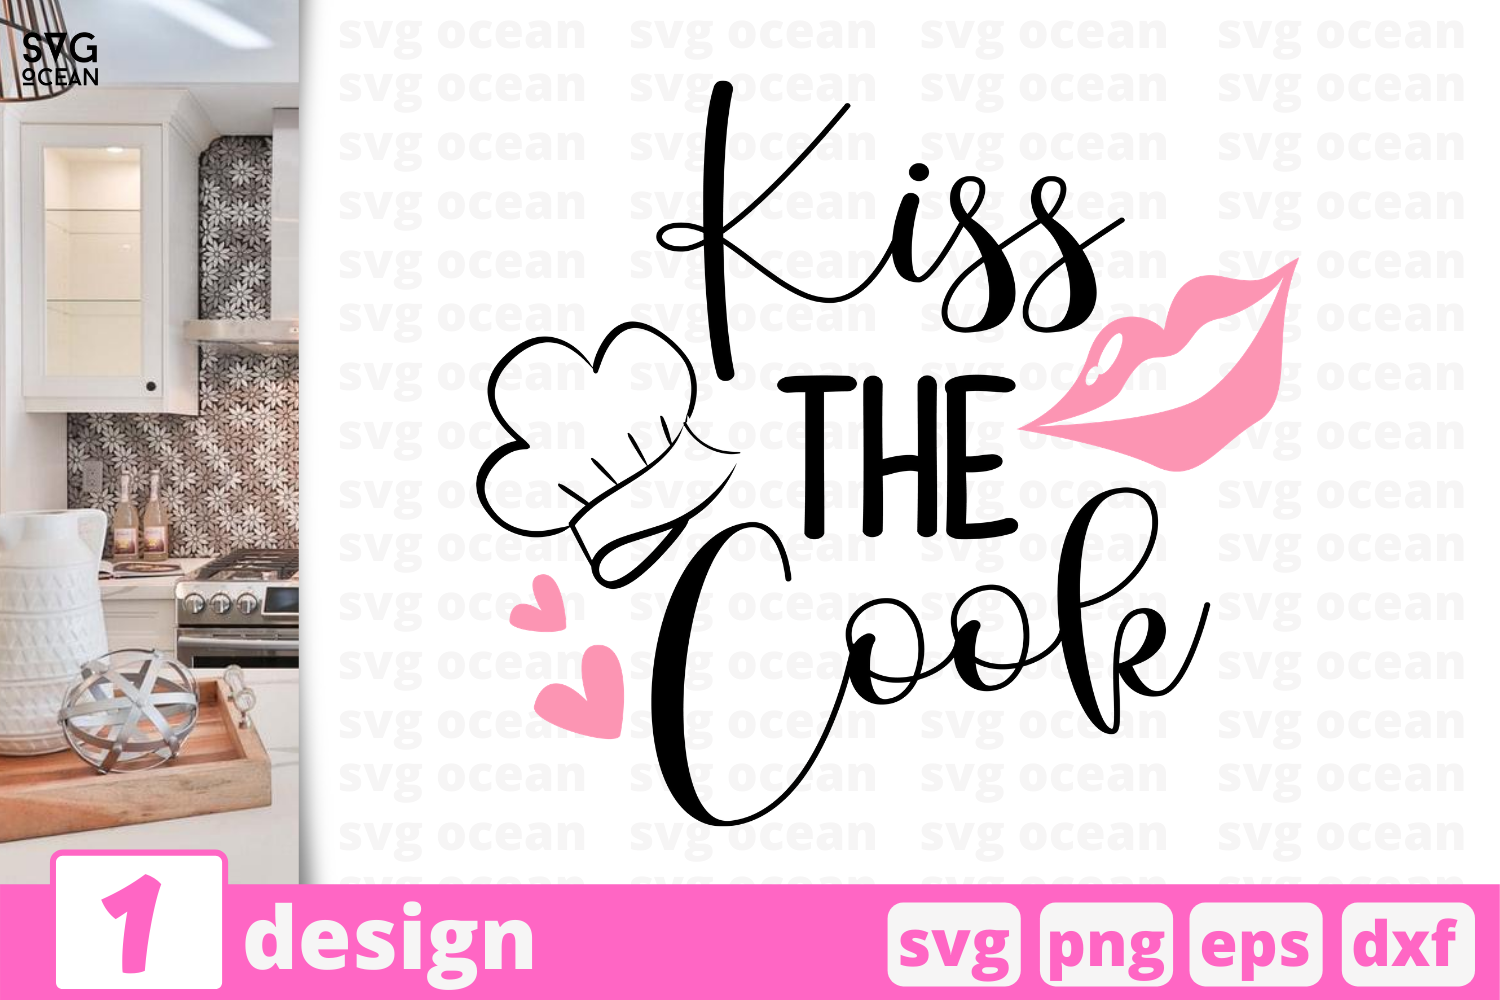 Download Kiss Svg Kitchen Clip Art Love Svg Kiss The Cook Svg Kitchen Apron Kitchen Shirt Print Love Eps Kitchen Svg Commercial Use Papercraft Craft Supplies Tools Kromasol Com